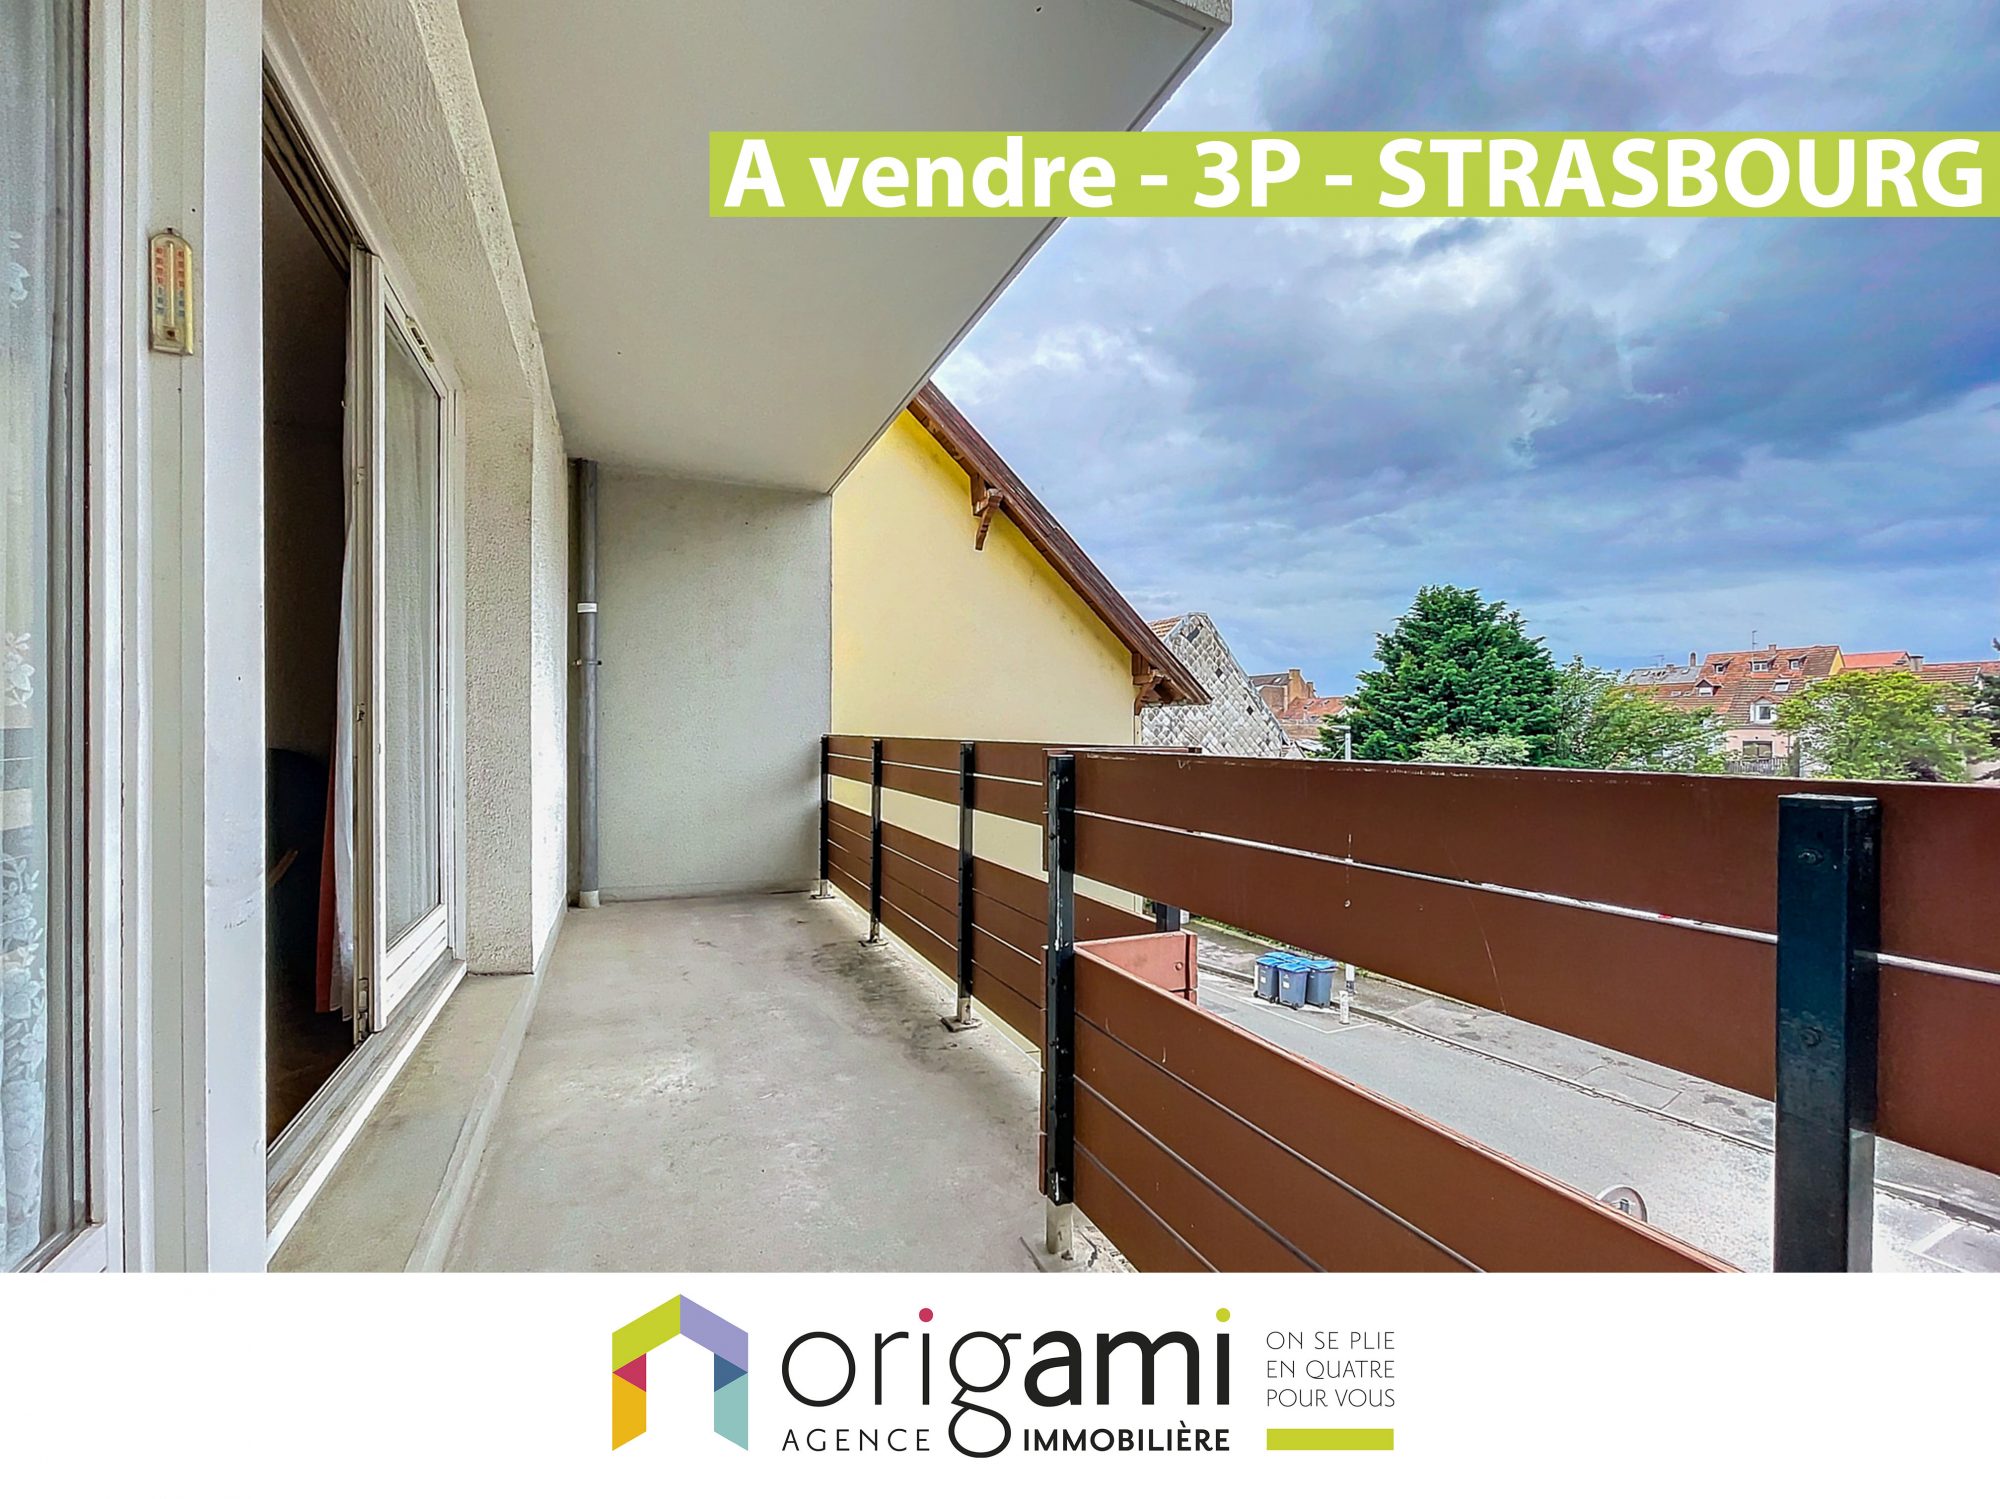 Vente Appartement 68m² 3 Pièces à Strasbourg (67200) - Origami